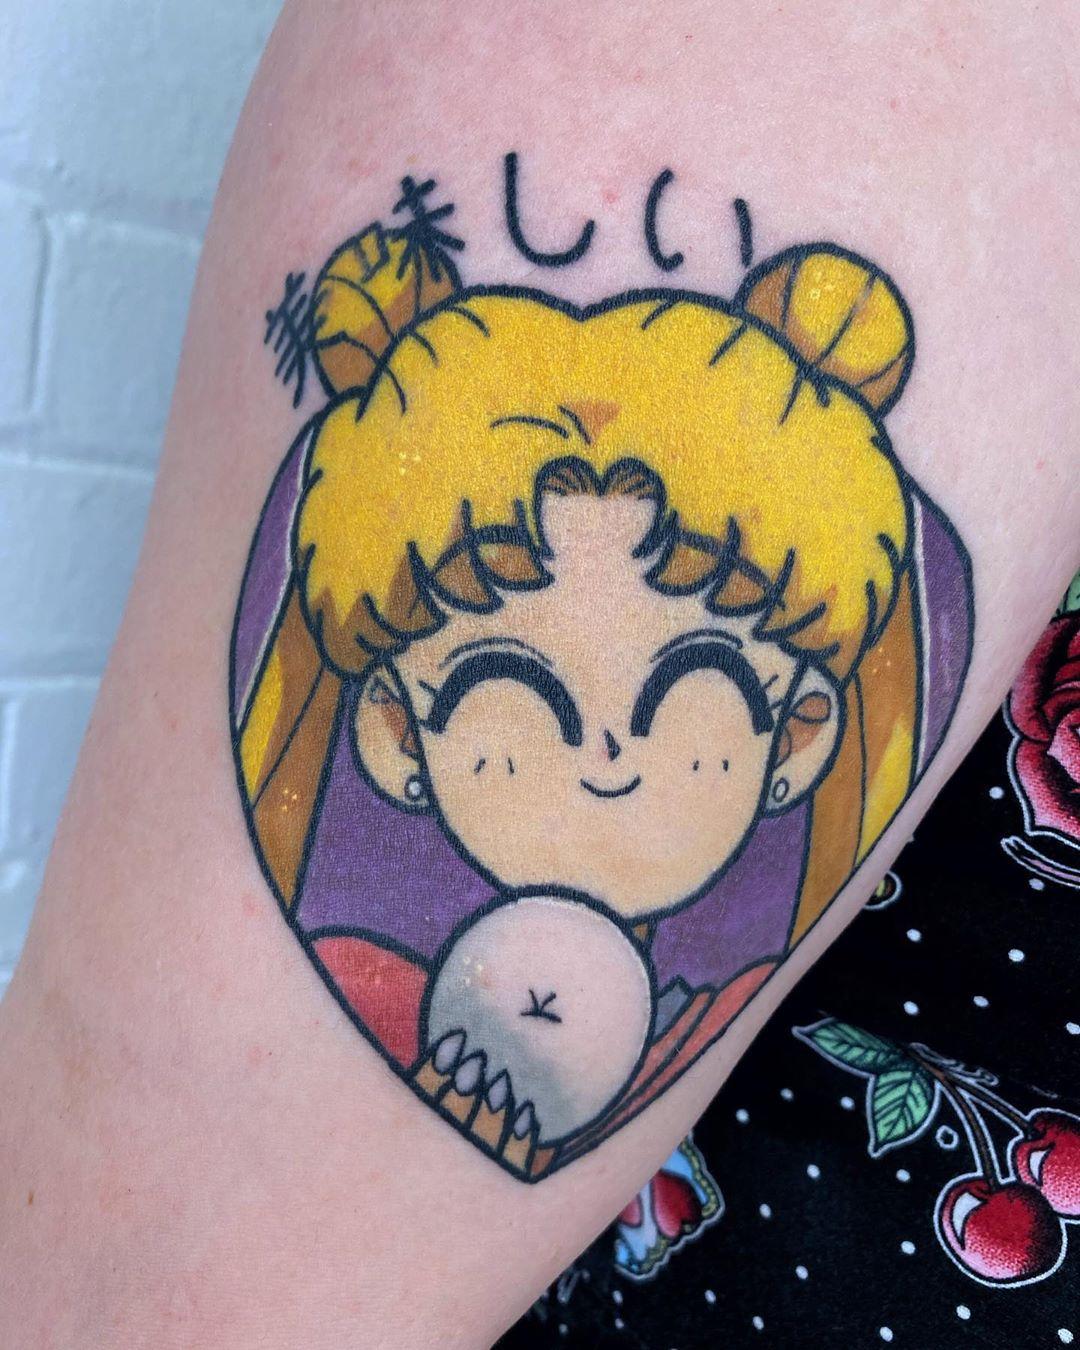 Cute Sailor Moon piece by @stickypop